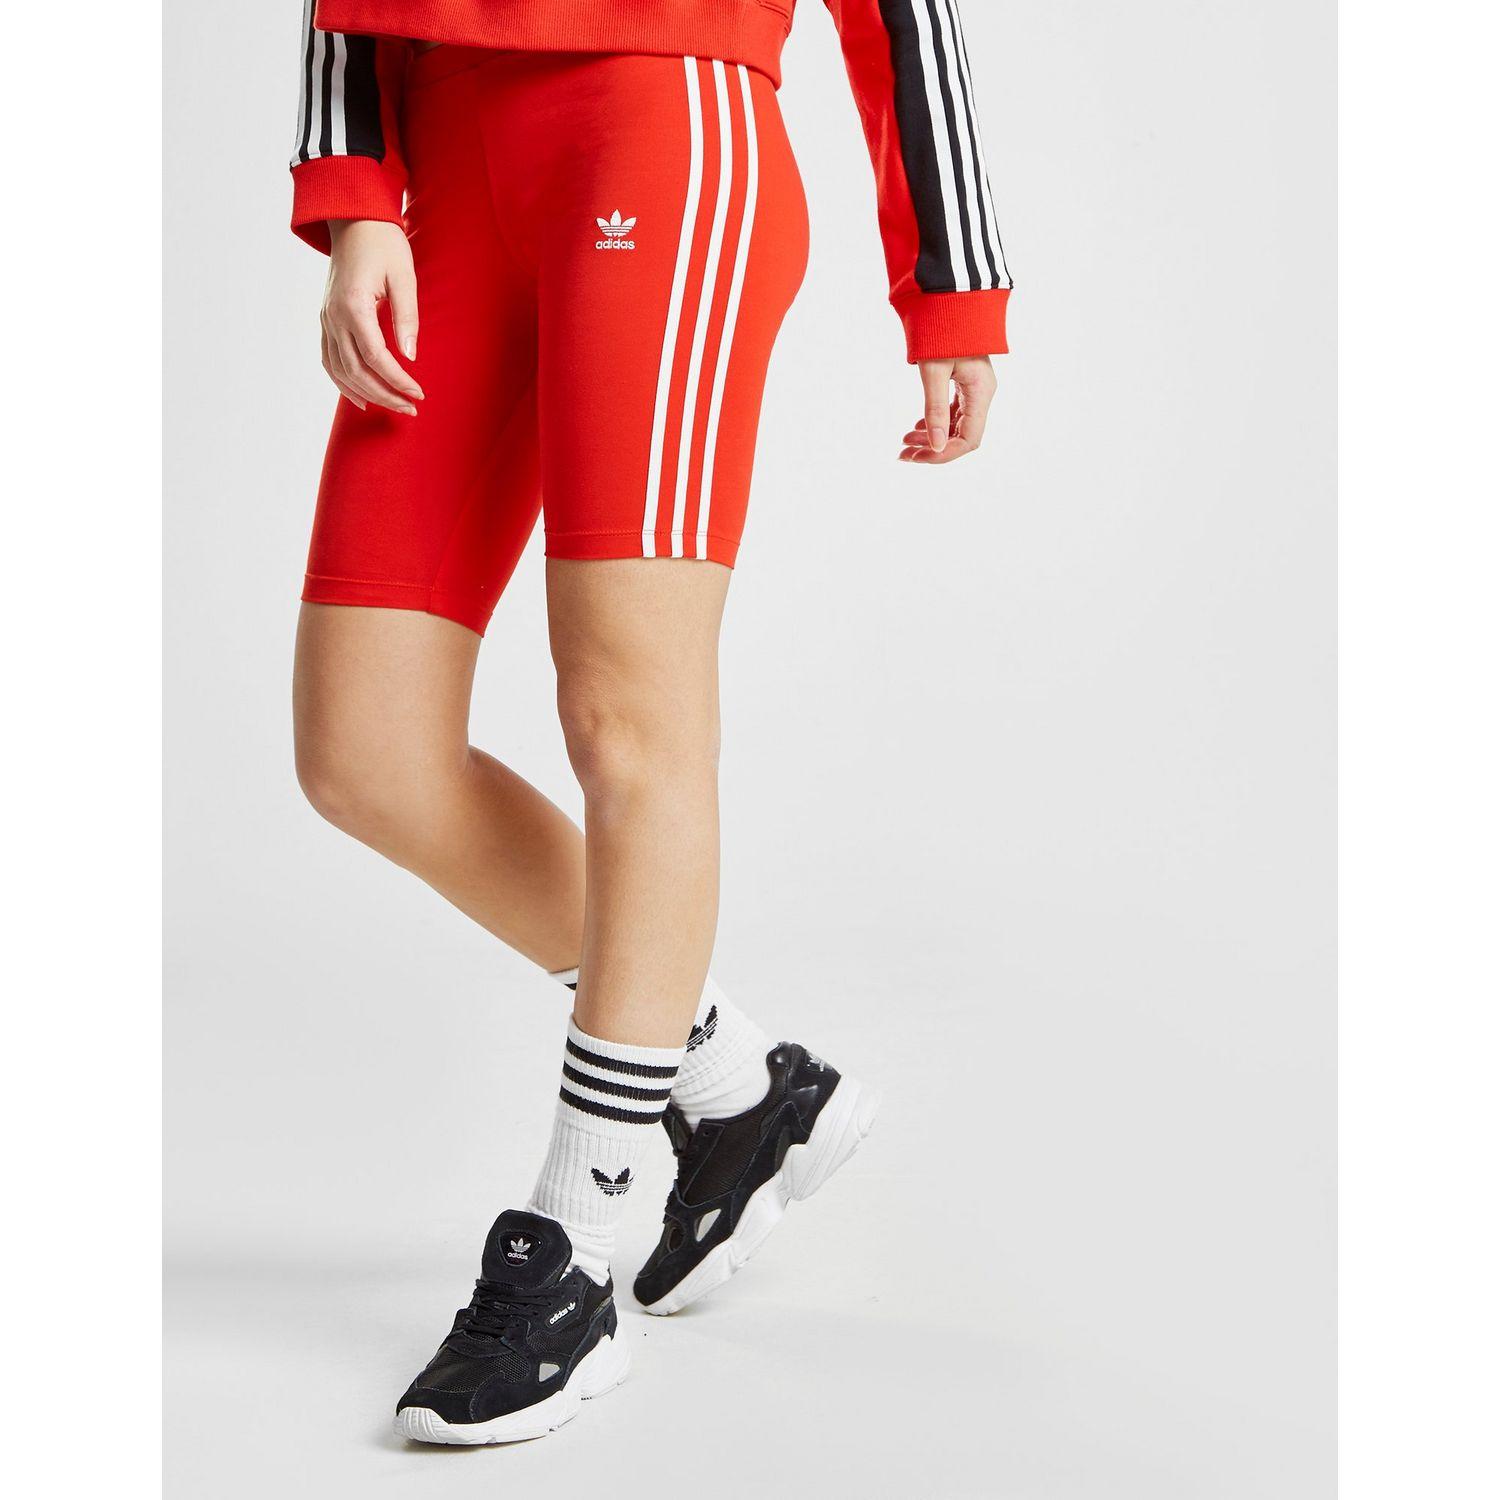 adidas 3 stripe cycling shorts